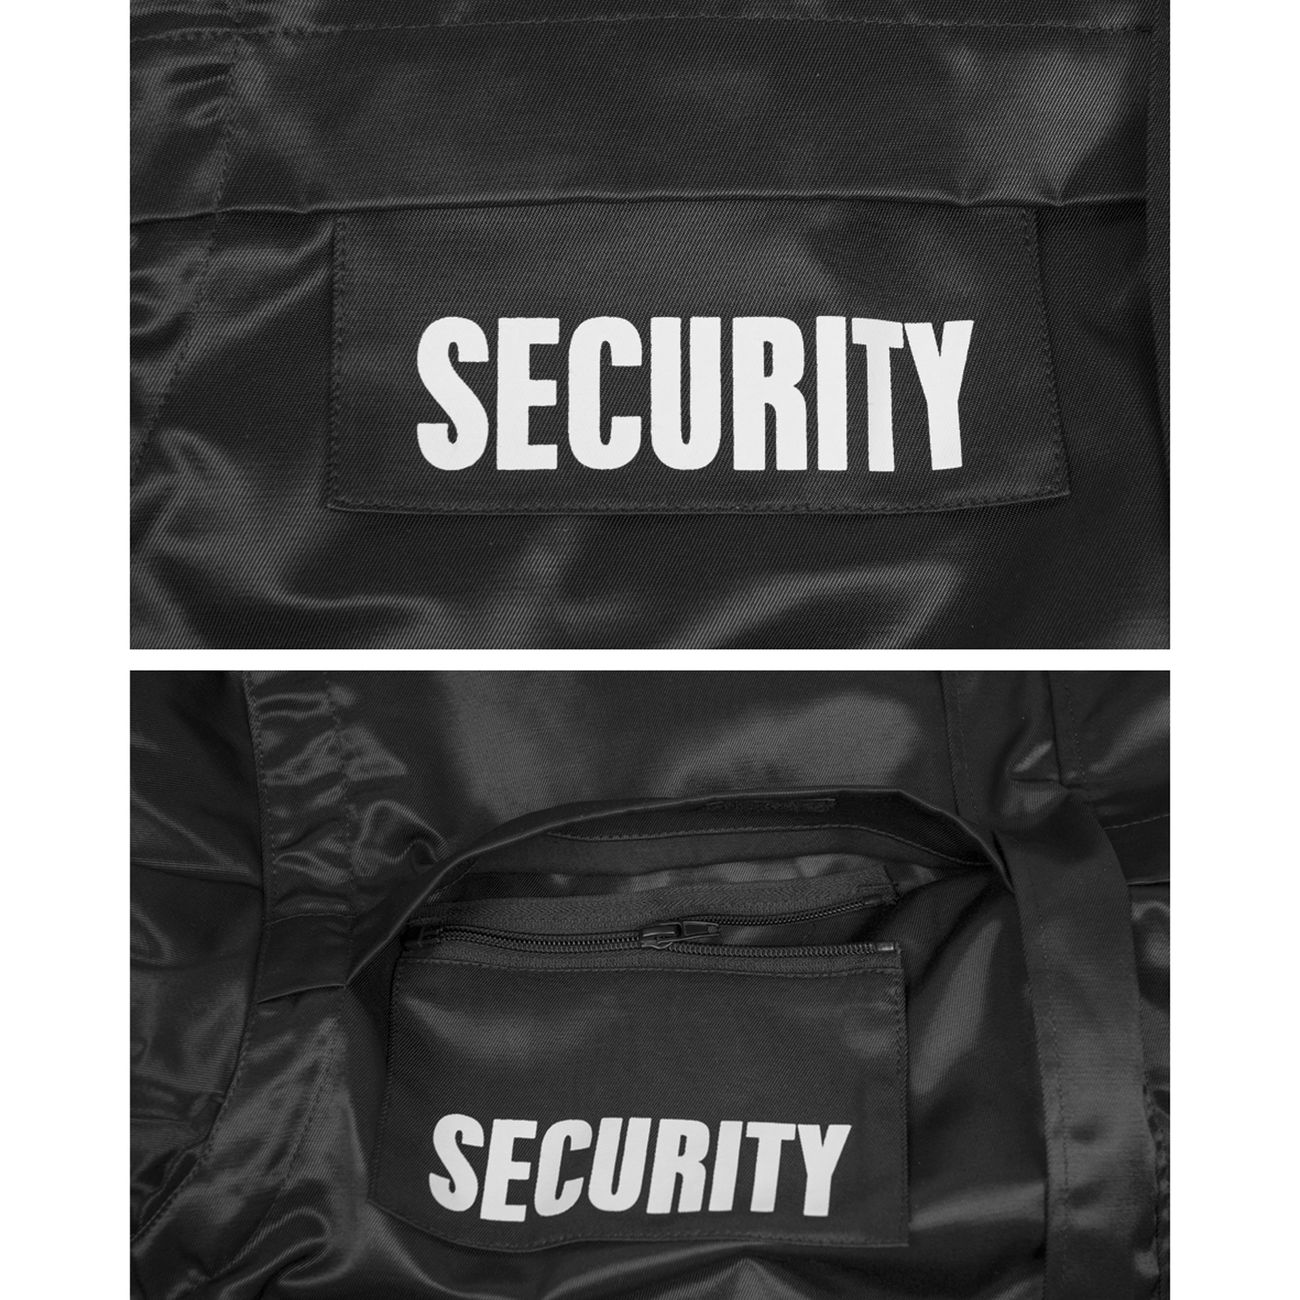 Frontpatch Security mit Zipper Bild 1